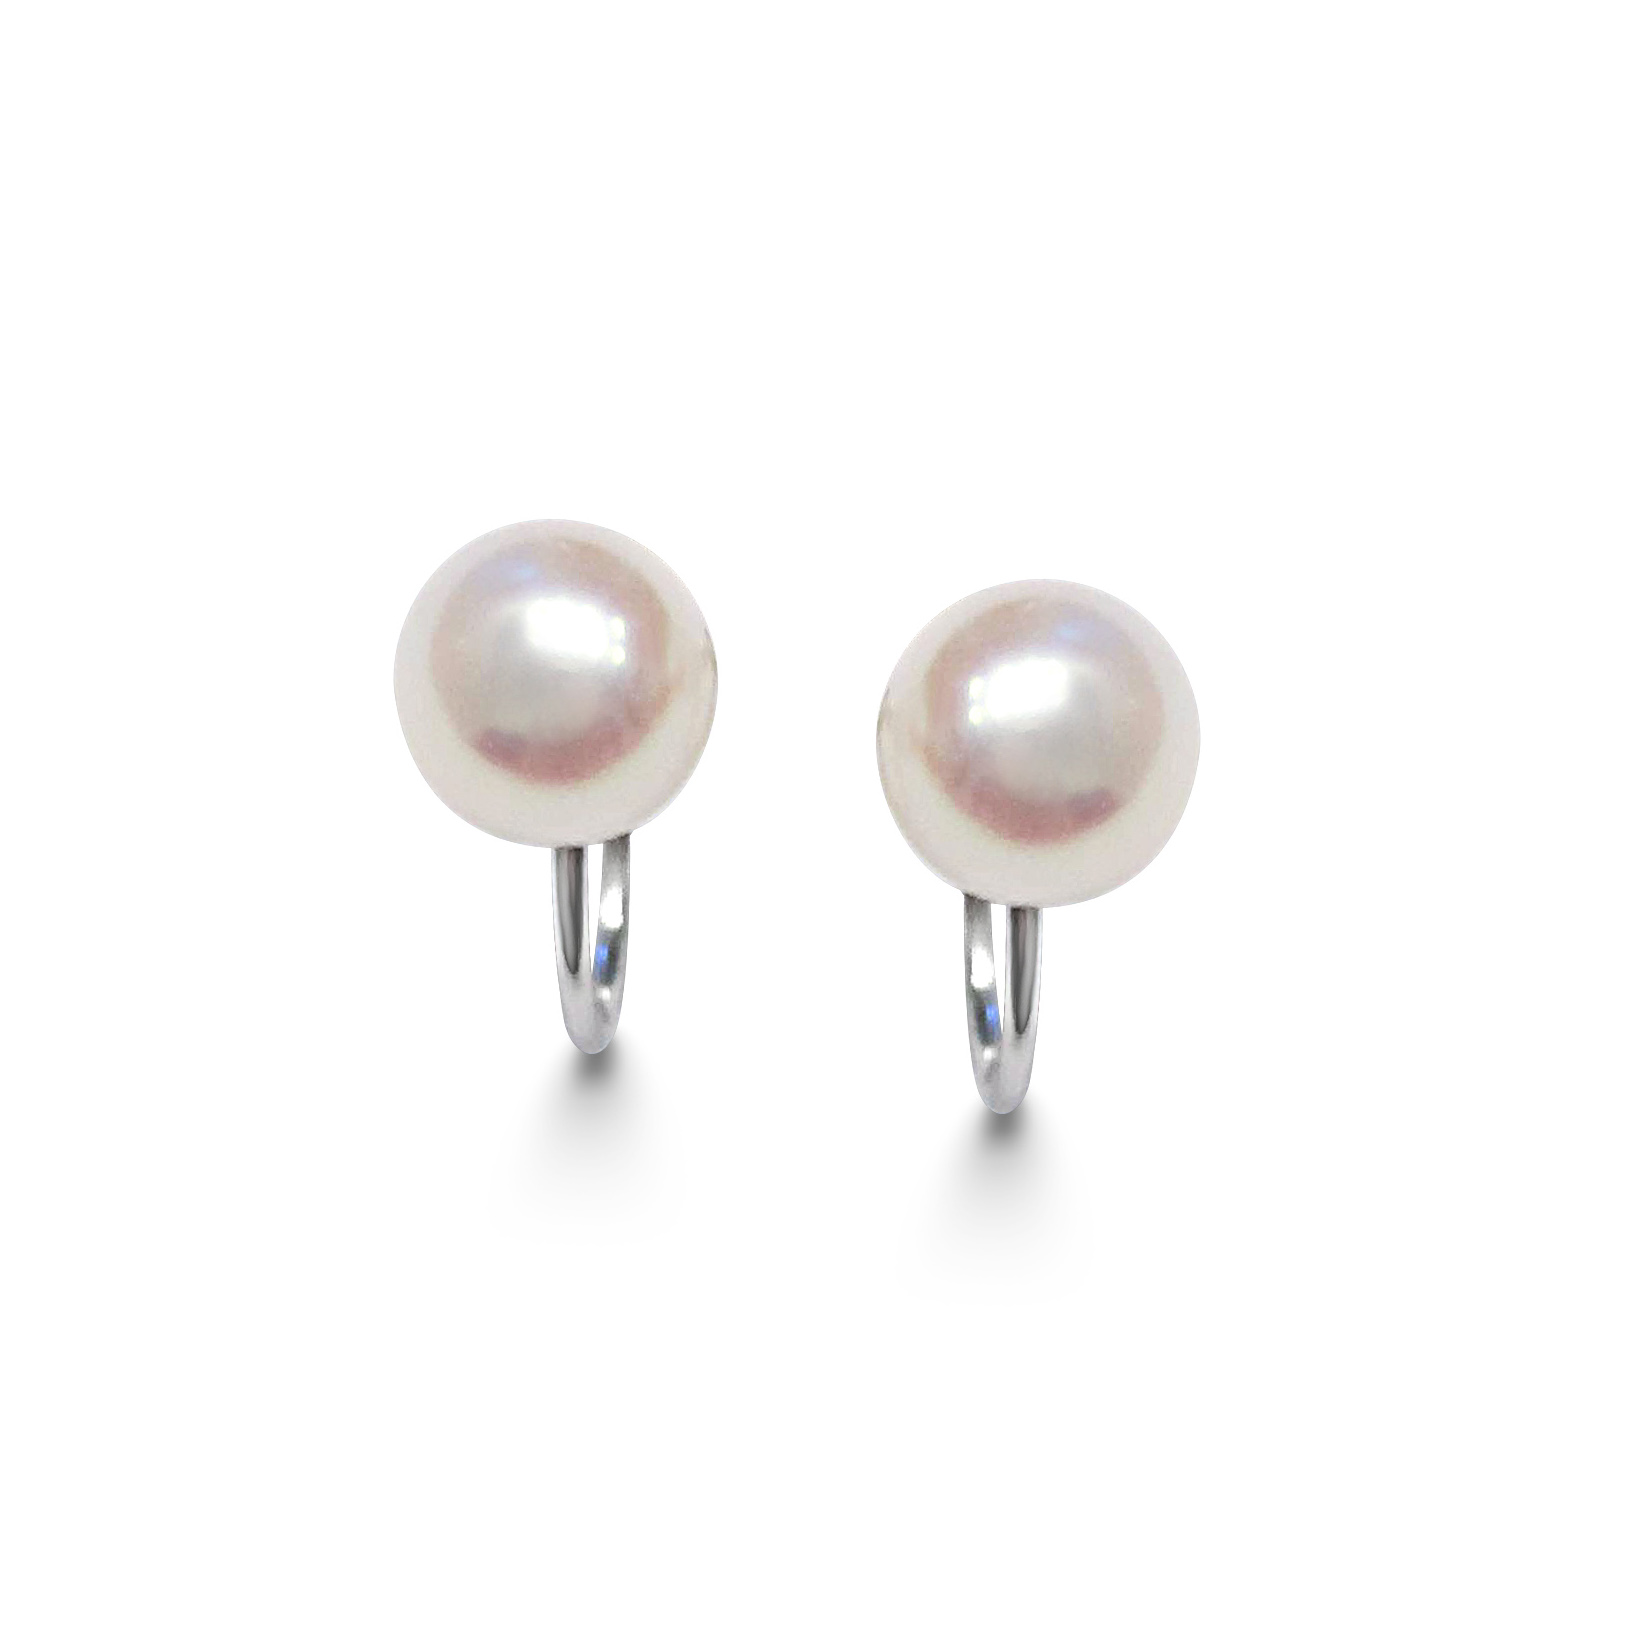 bespoke-cultured-pearl-stud-earrings-with-18ct-white-gold-screw-back-fittings-3.jpg